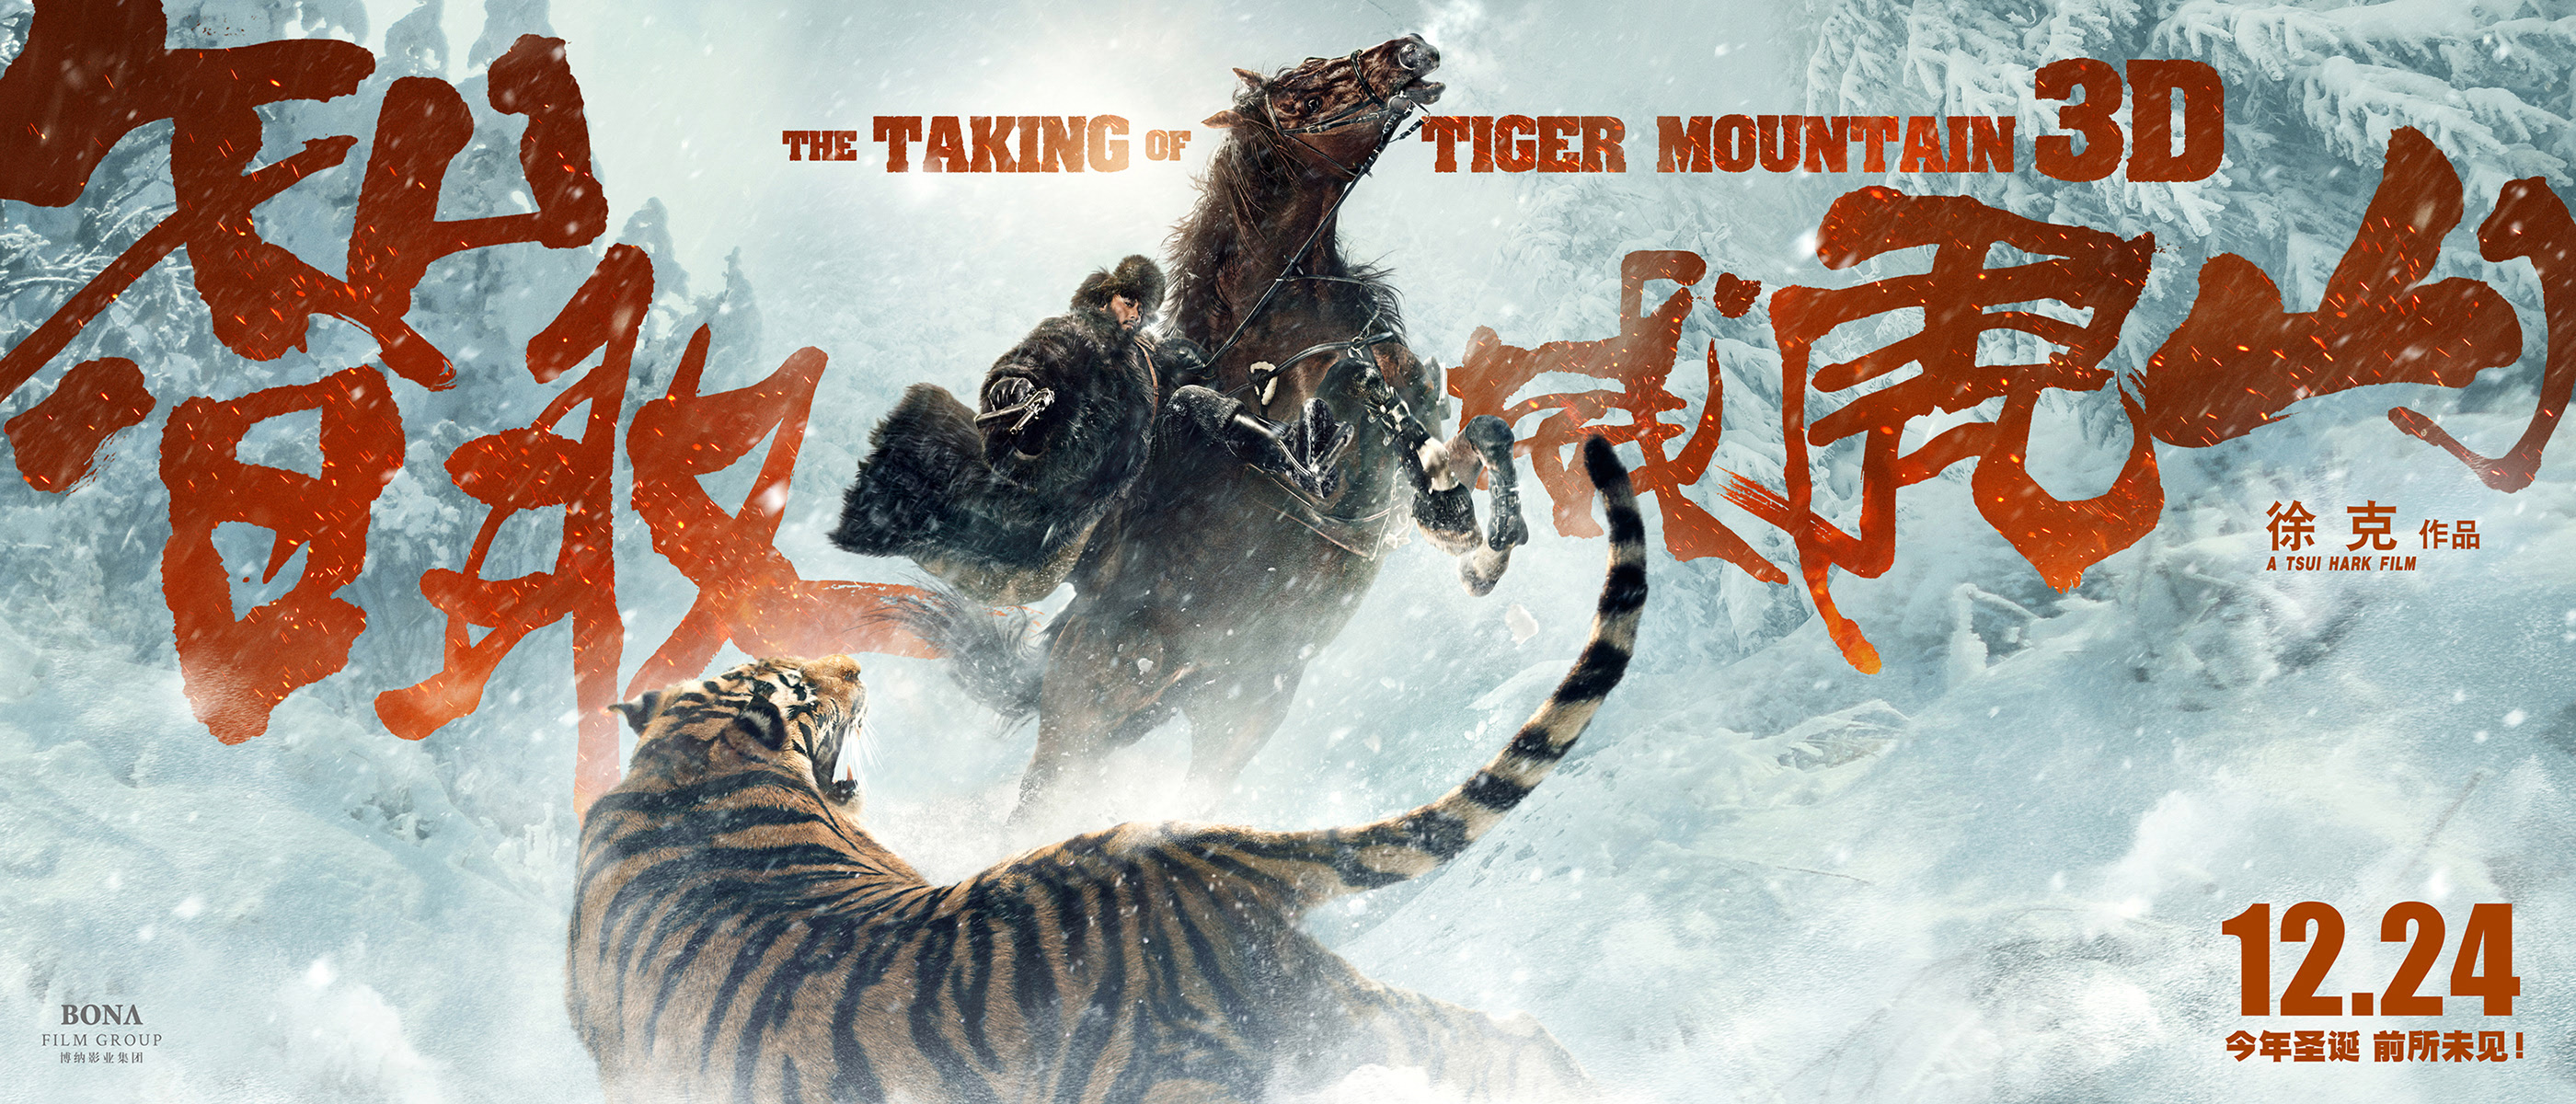 Захват горы тигра. Ловкий захват тигровой горы.